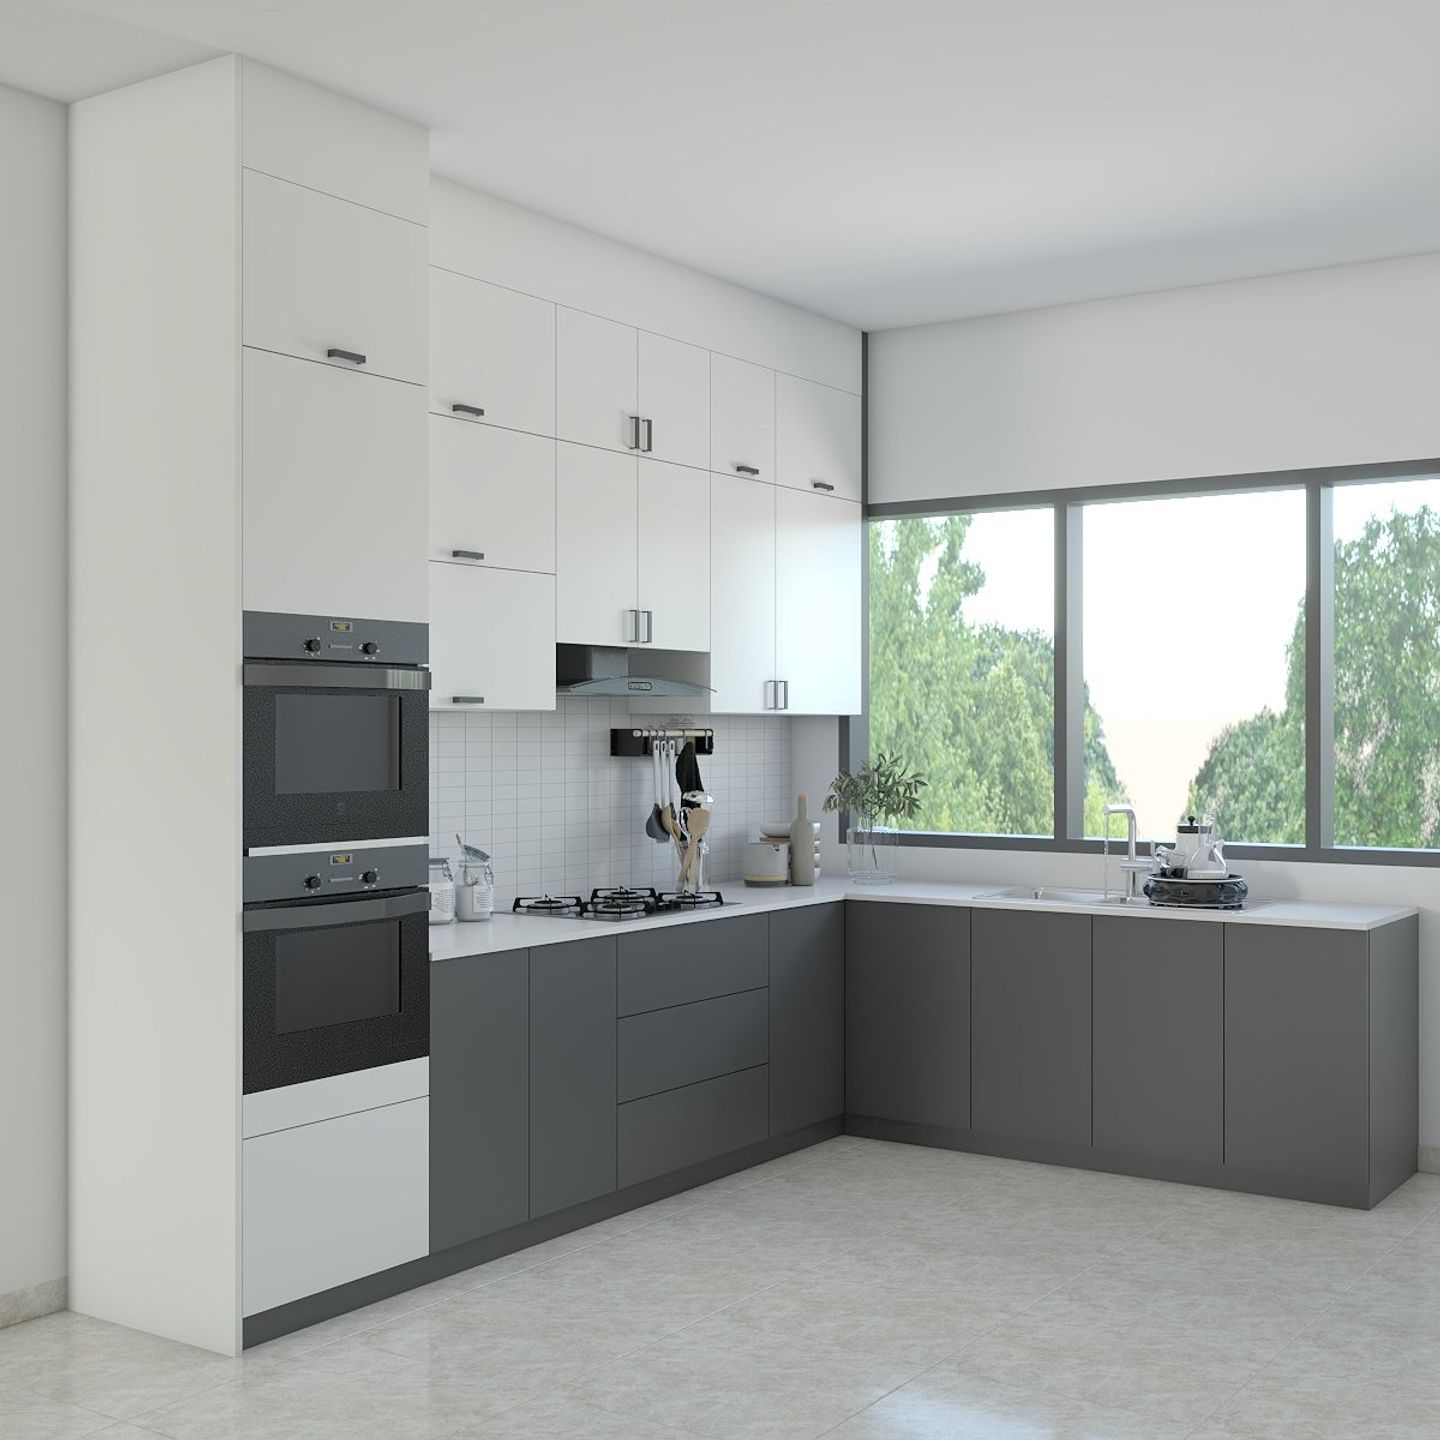 Minimal Kitchen Design With A Convenient L-Shaped Layout - Livspace